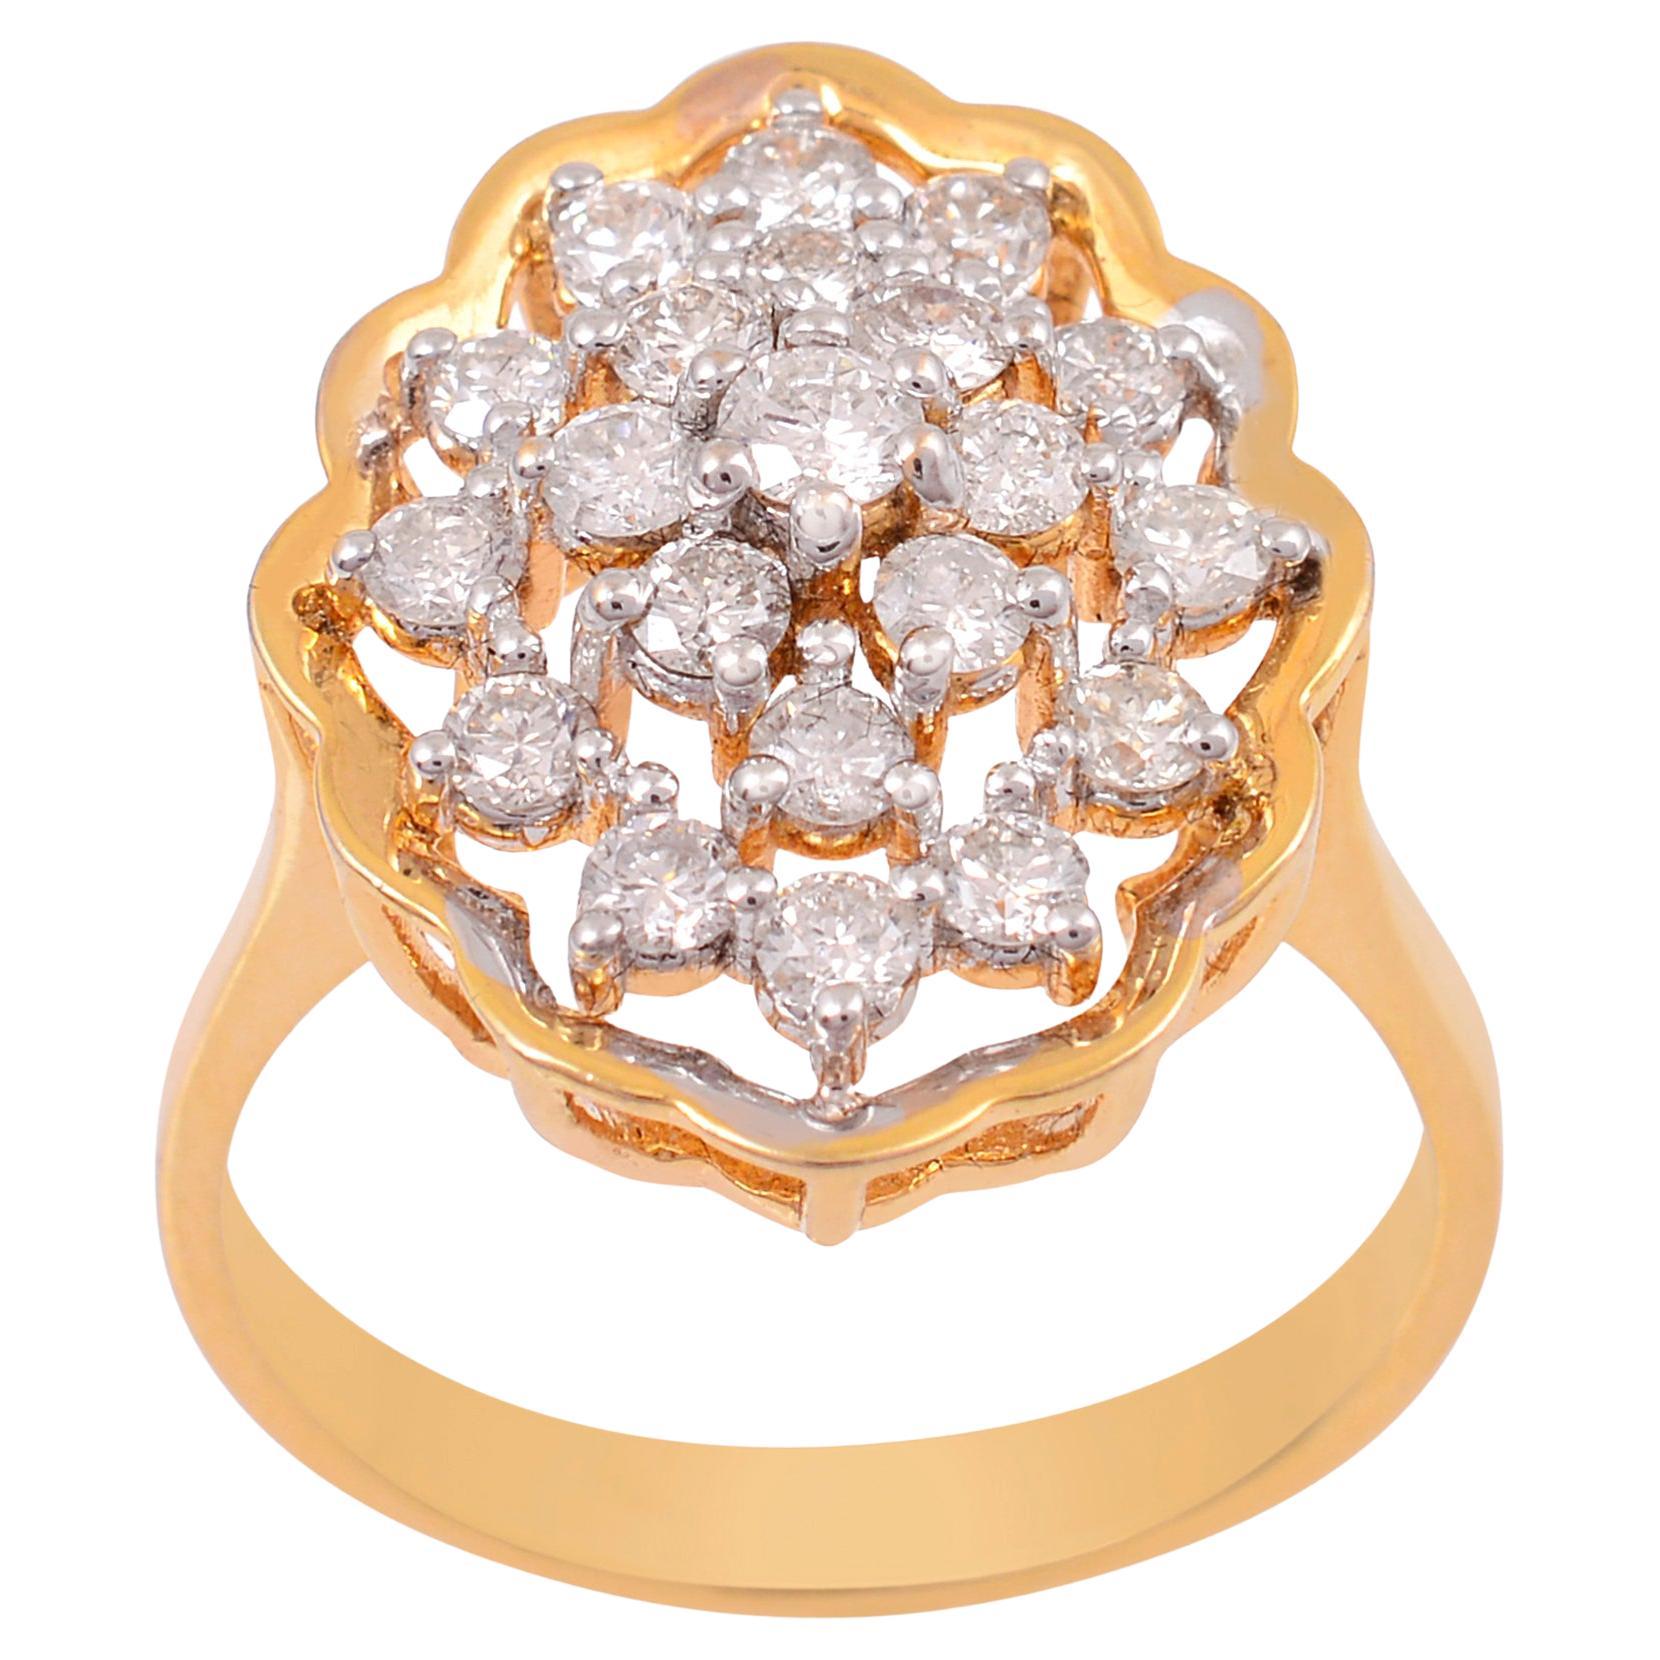 1.10 Carat Diamond Flower Design Ring 18 Karat Rose Gold Handmade Fine Jewelry